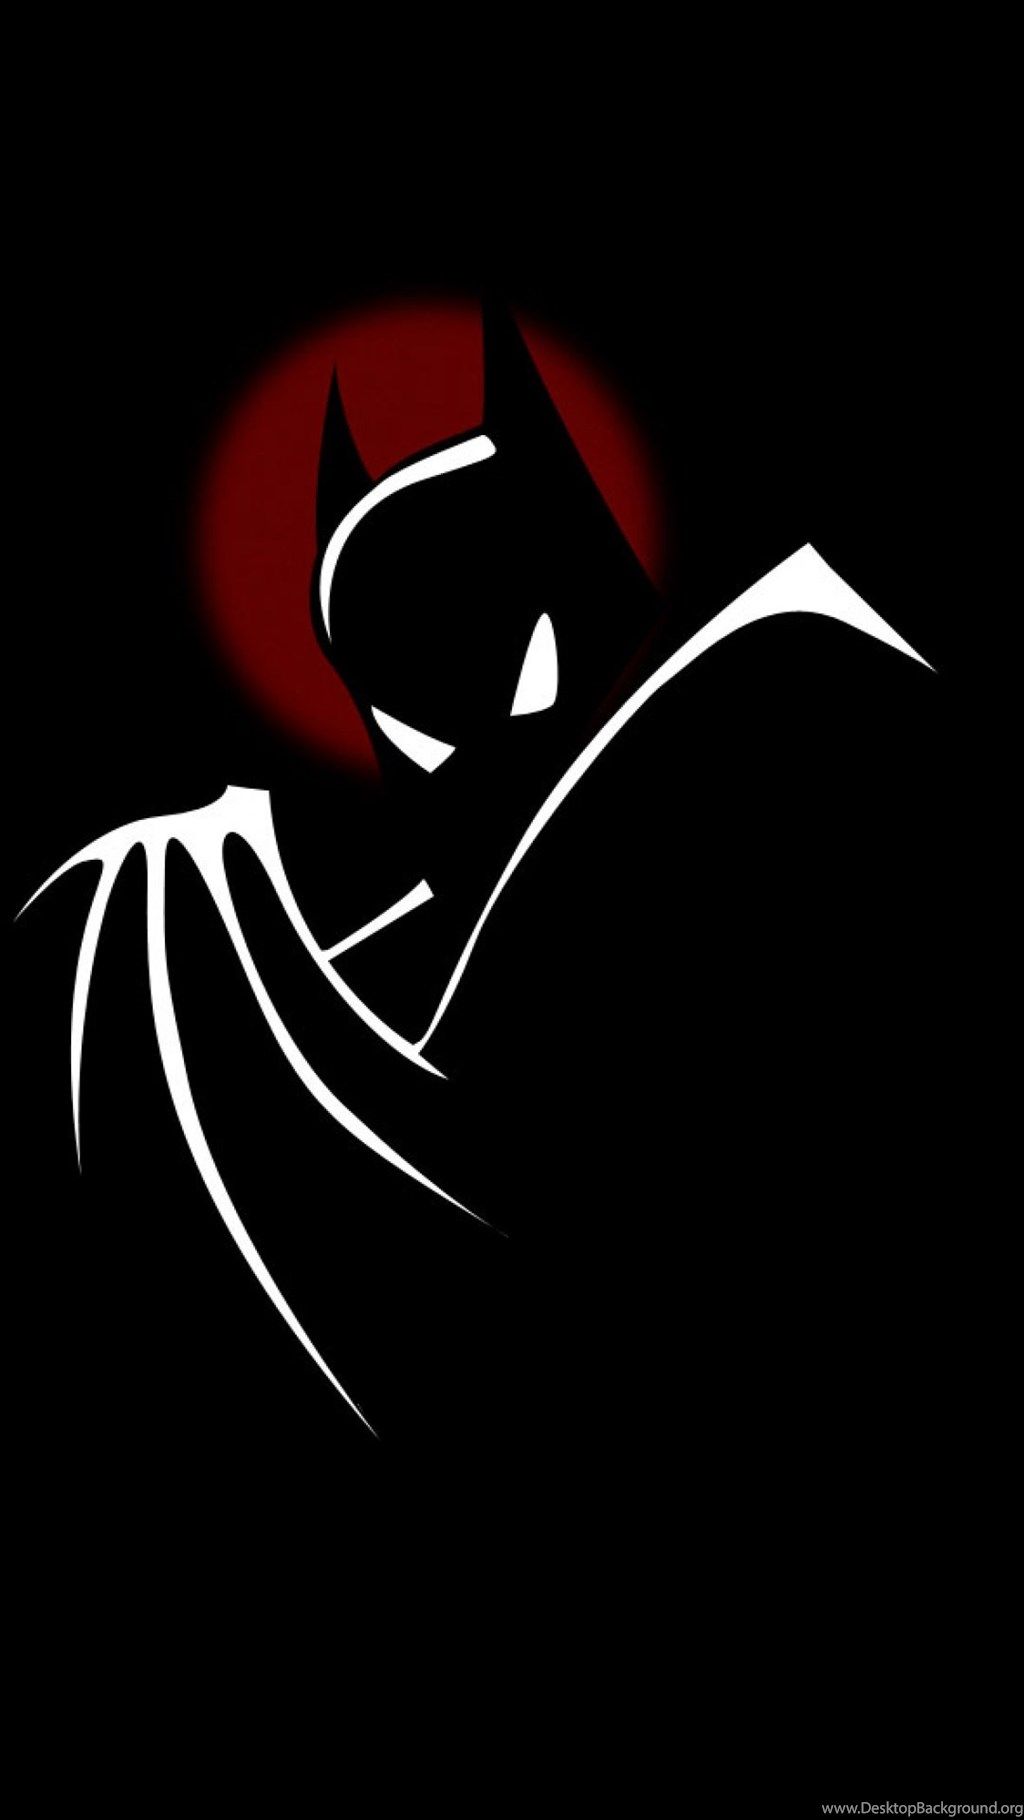 Download Batman wallpapers for mobile phone, free Batman HD